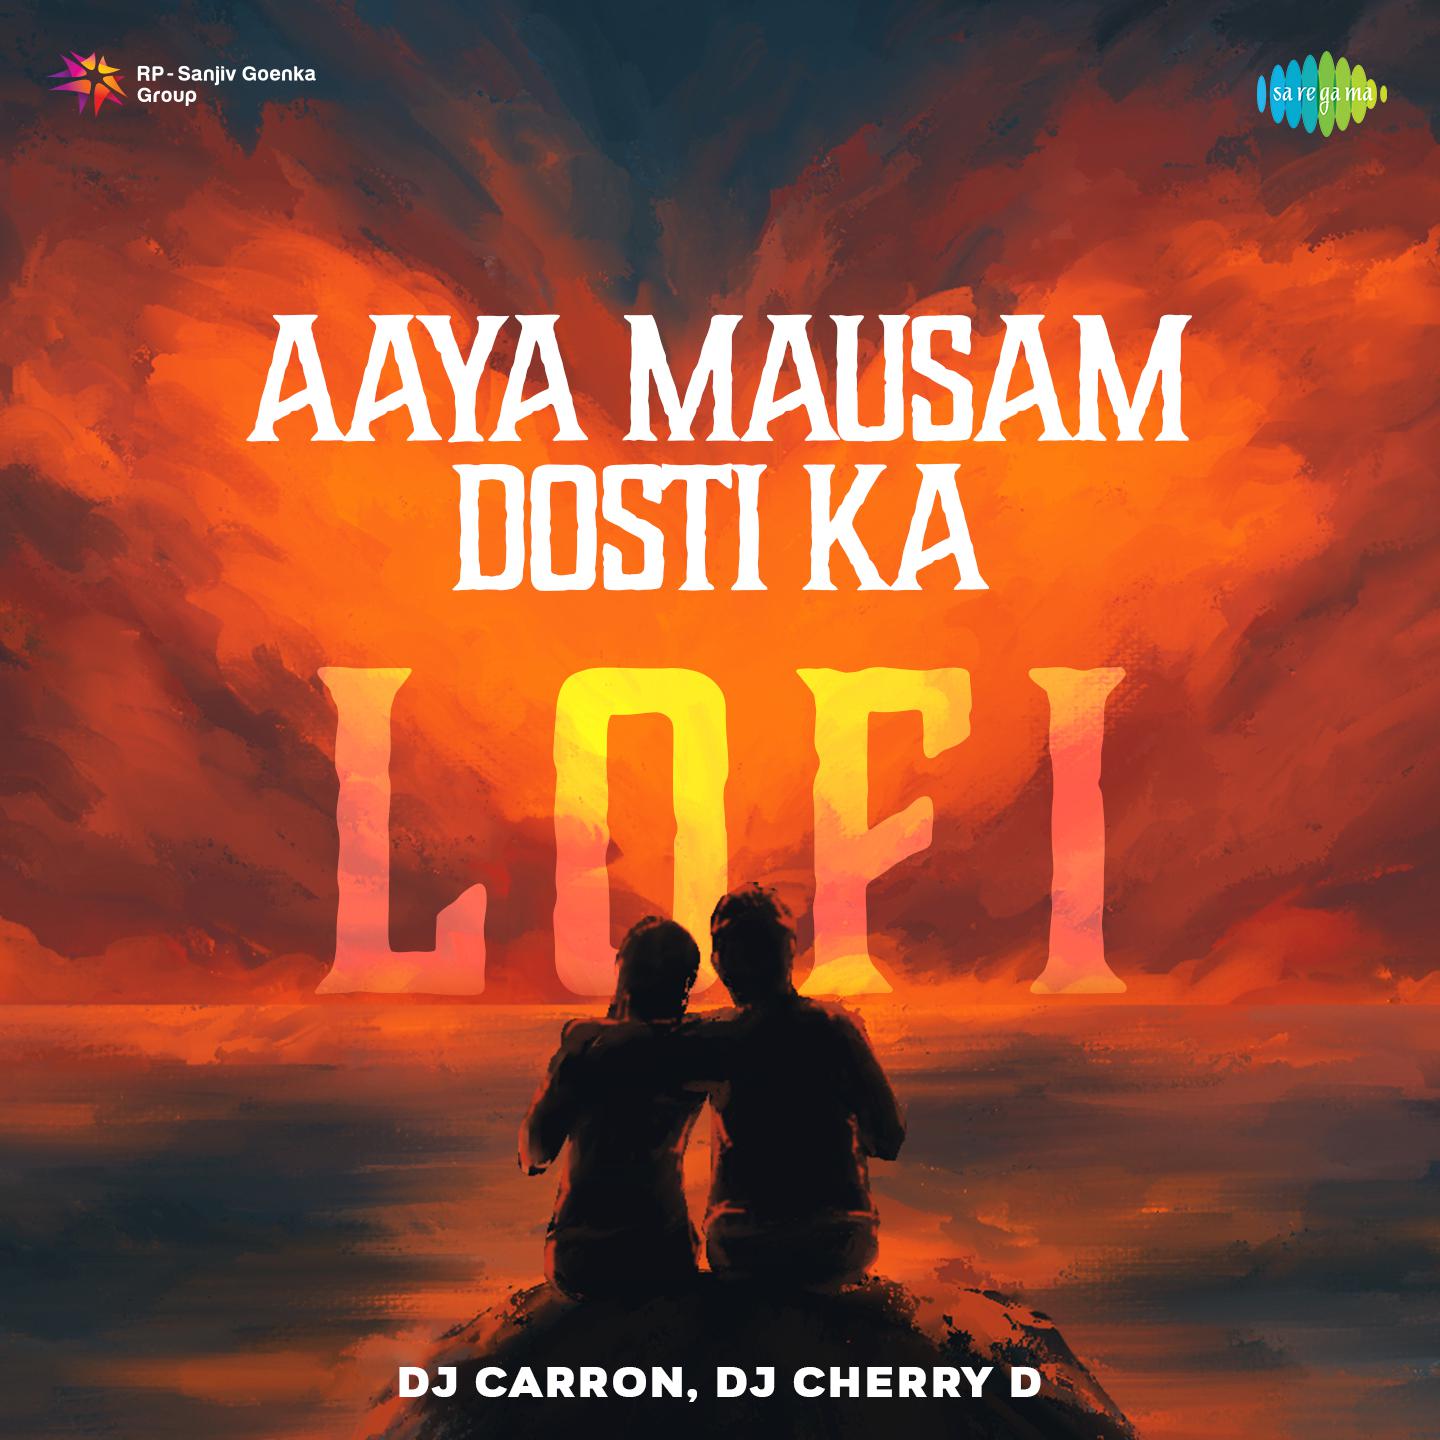 DJ Carron - Aaya Mausam Dosti Ka - Lofi